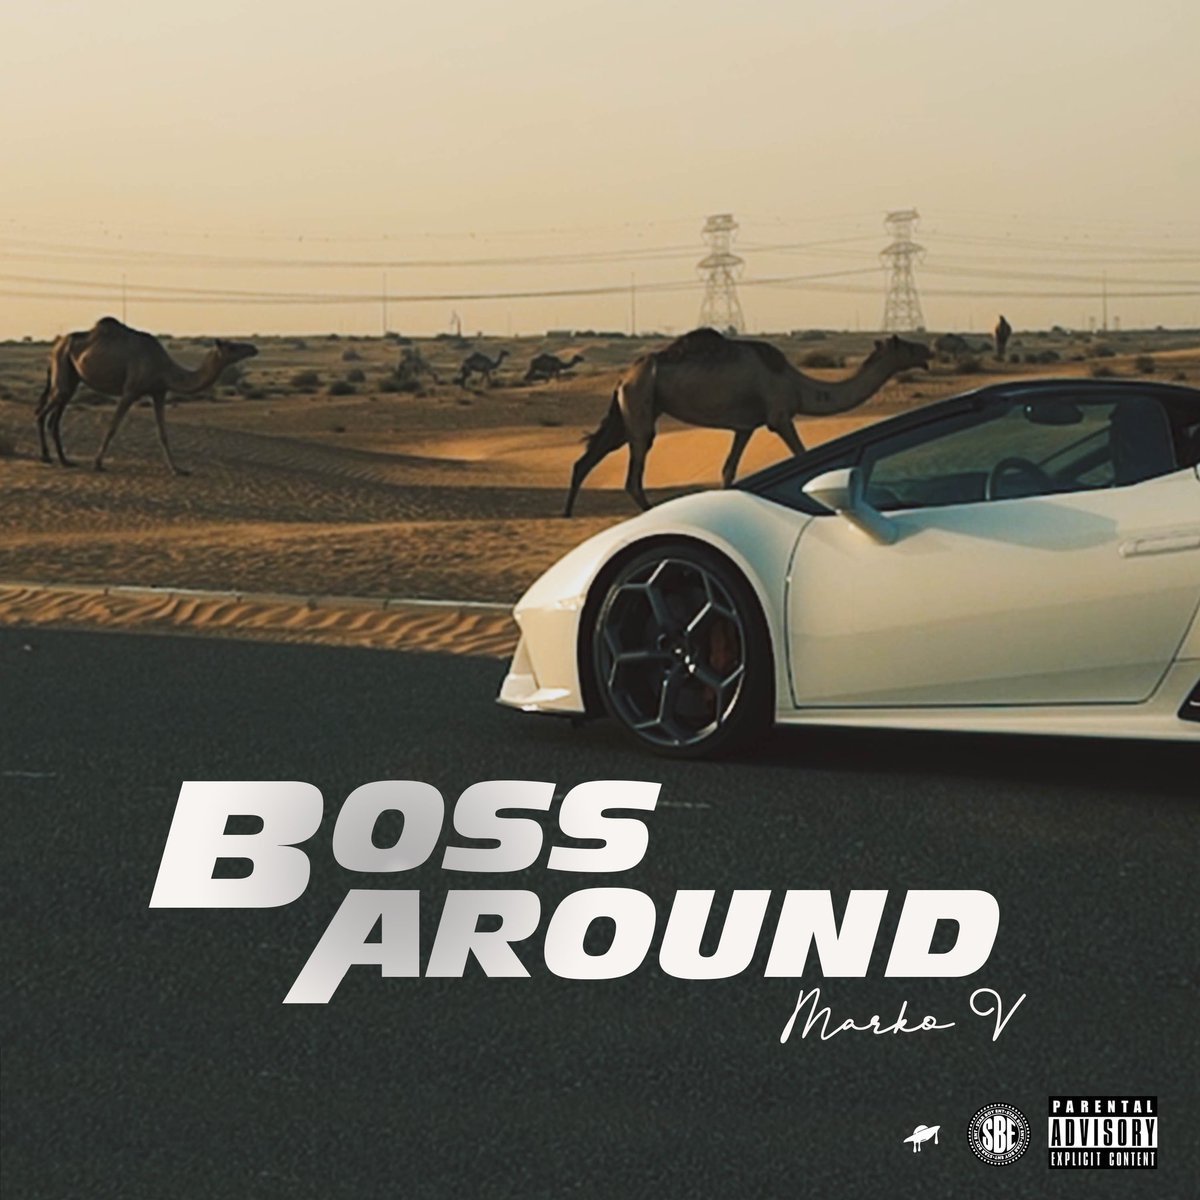 [Music Video] Marko V – Boss Around (Prod by @1youngpurpp) | @RTBIS_V